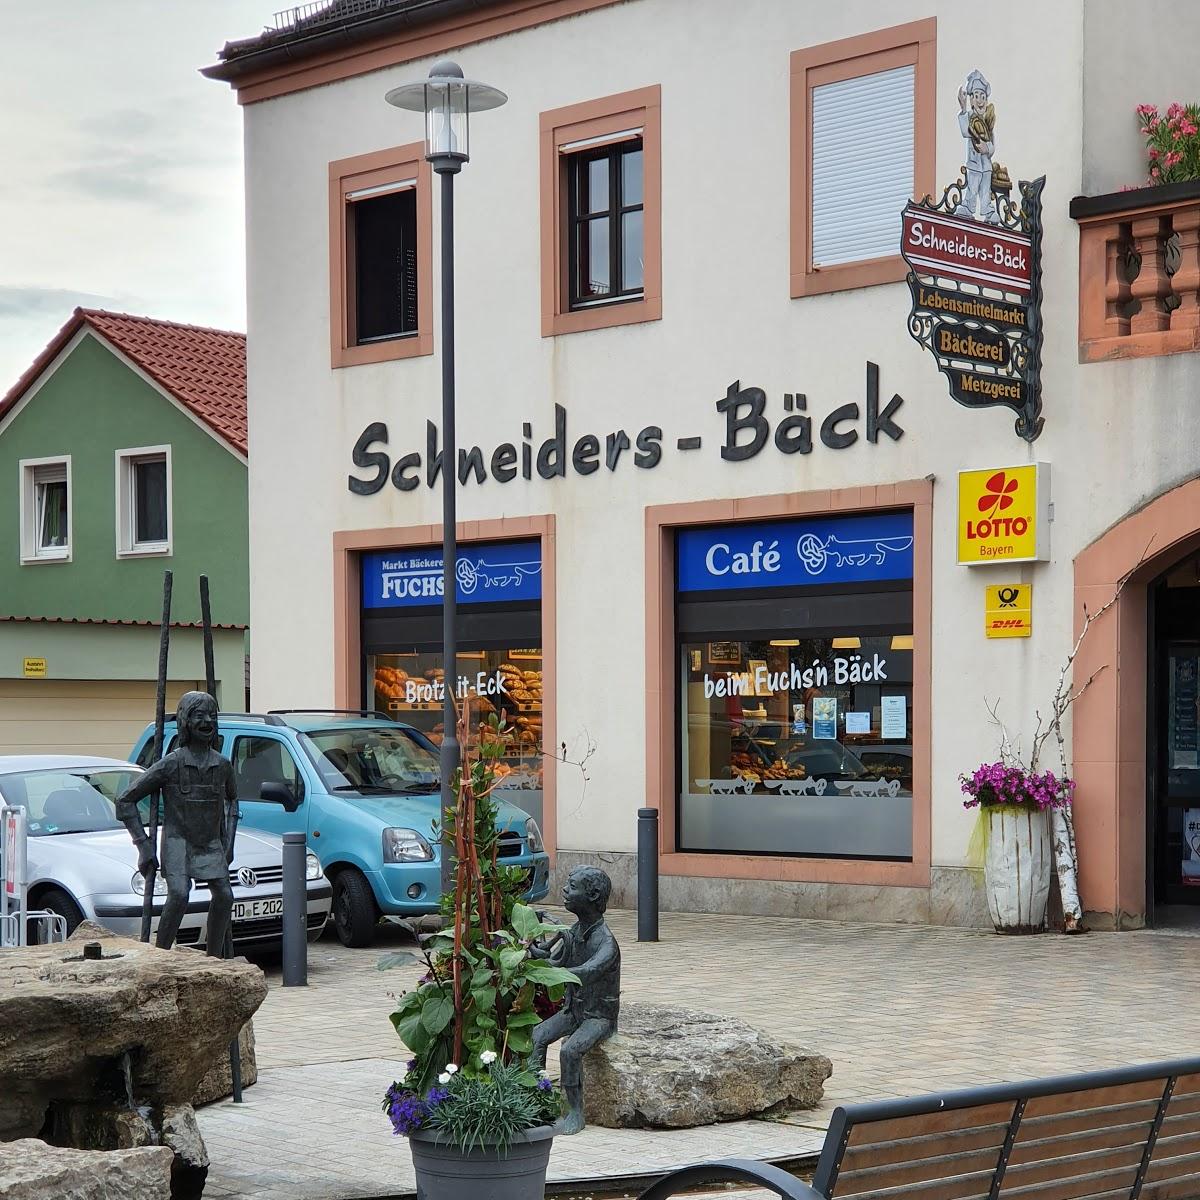 Restaurant "Bäckerei Fuchs" in Schwarzach am Main